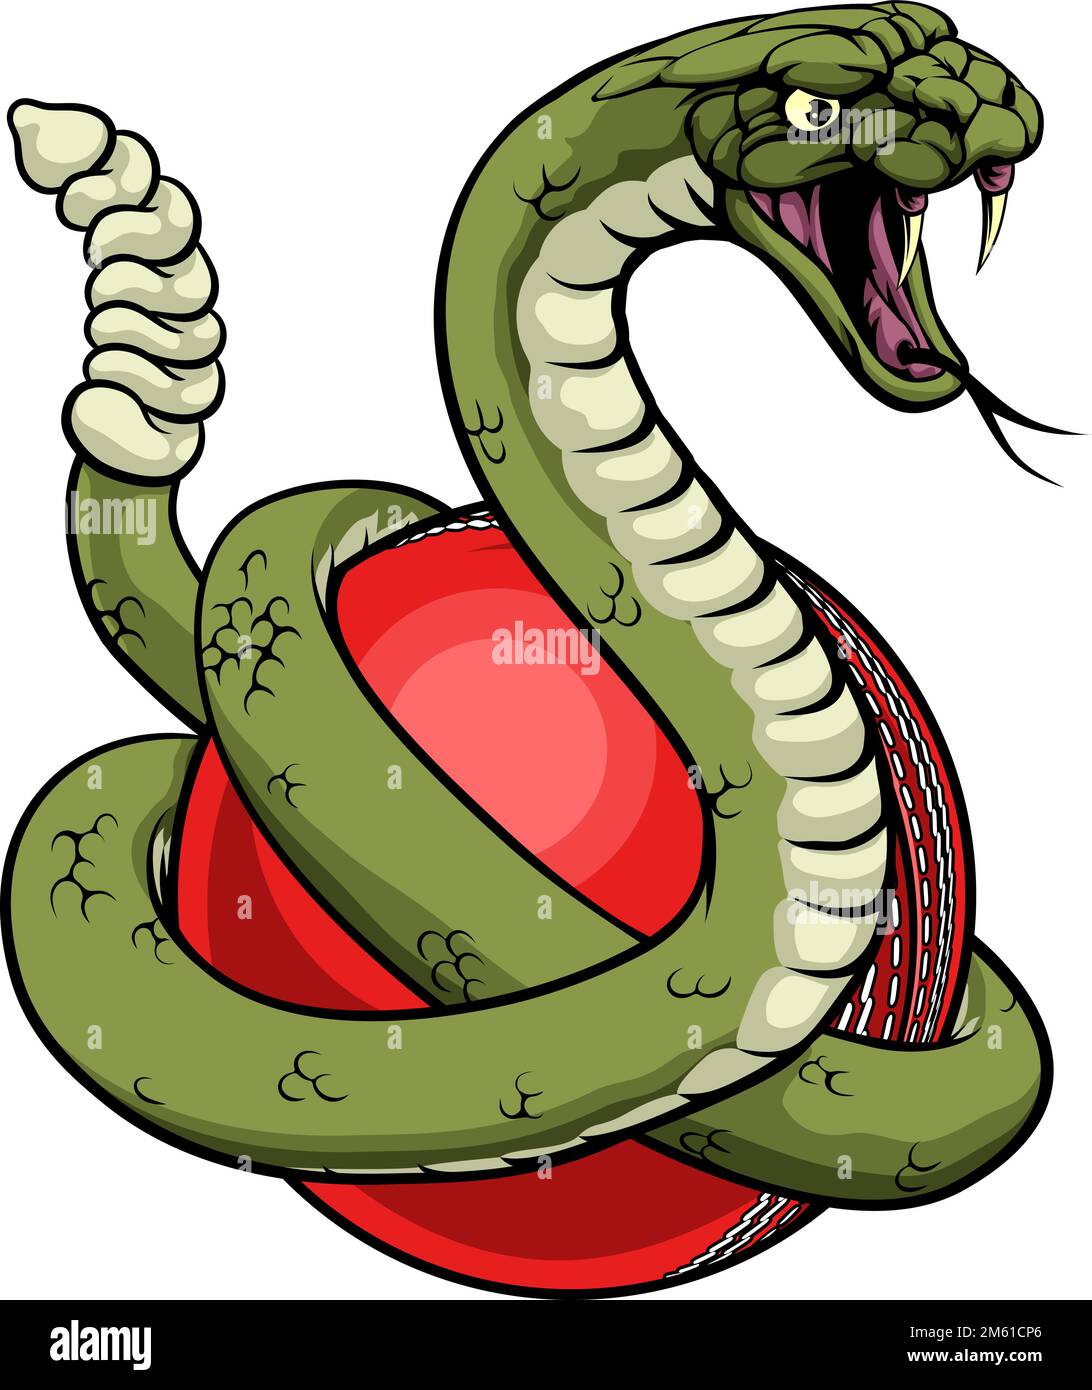 Rattlesnake Cricket Ball Animal Sports Team Mascot Illustrazione Vettoriale